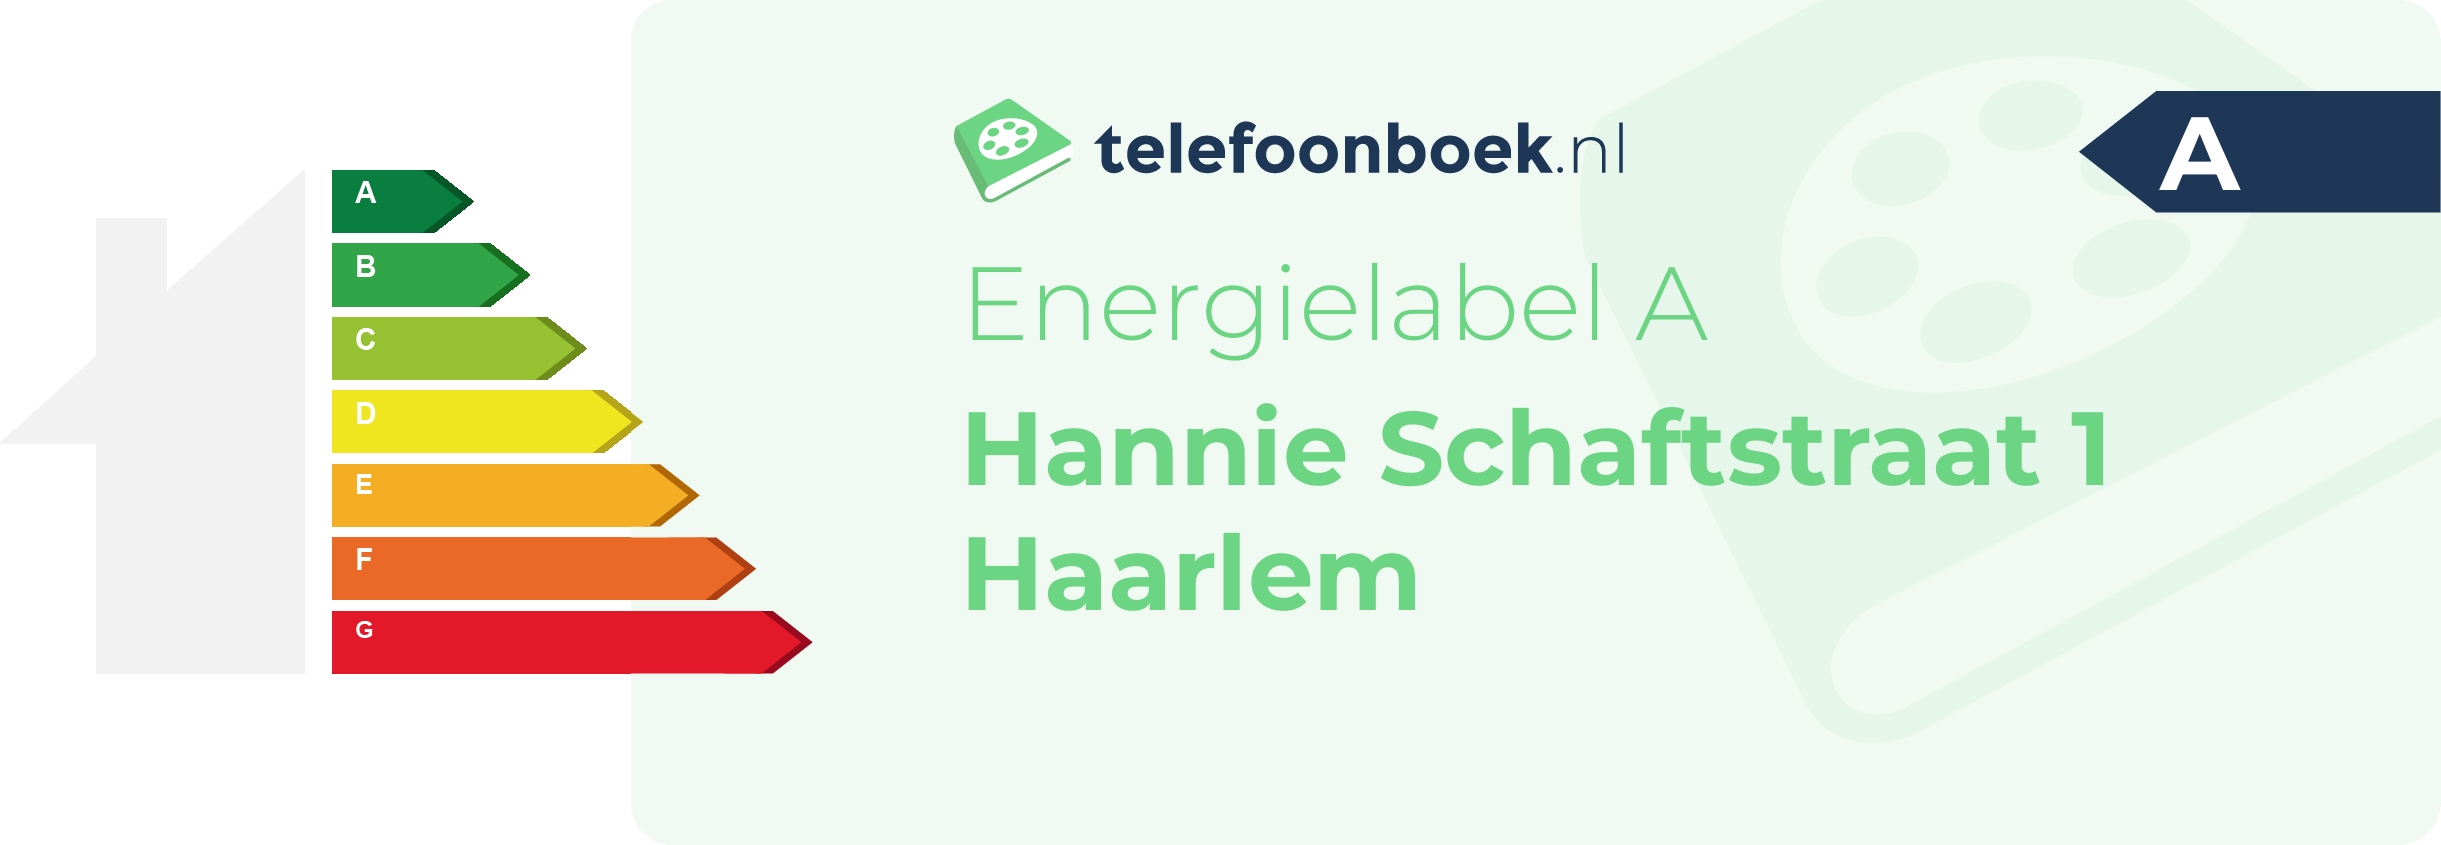 Energielabel Hannie Schaftstraat 1 Haarlem